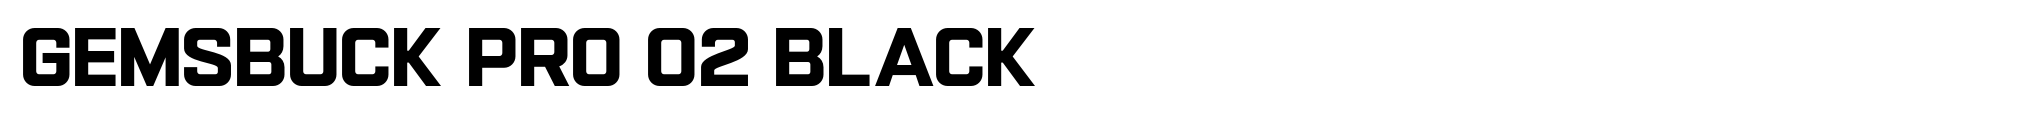 Gemsbuck Pro 02 Black image